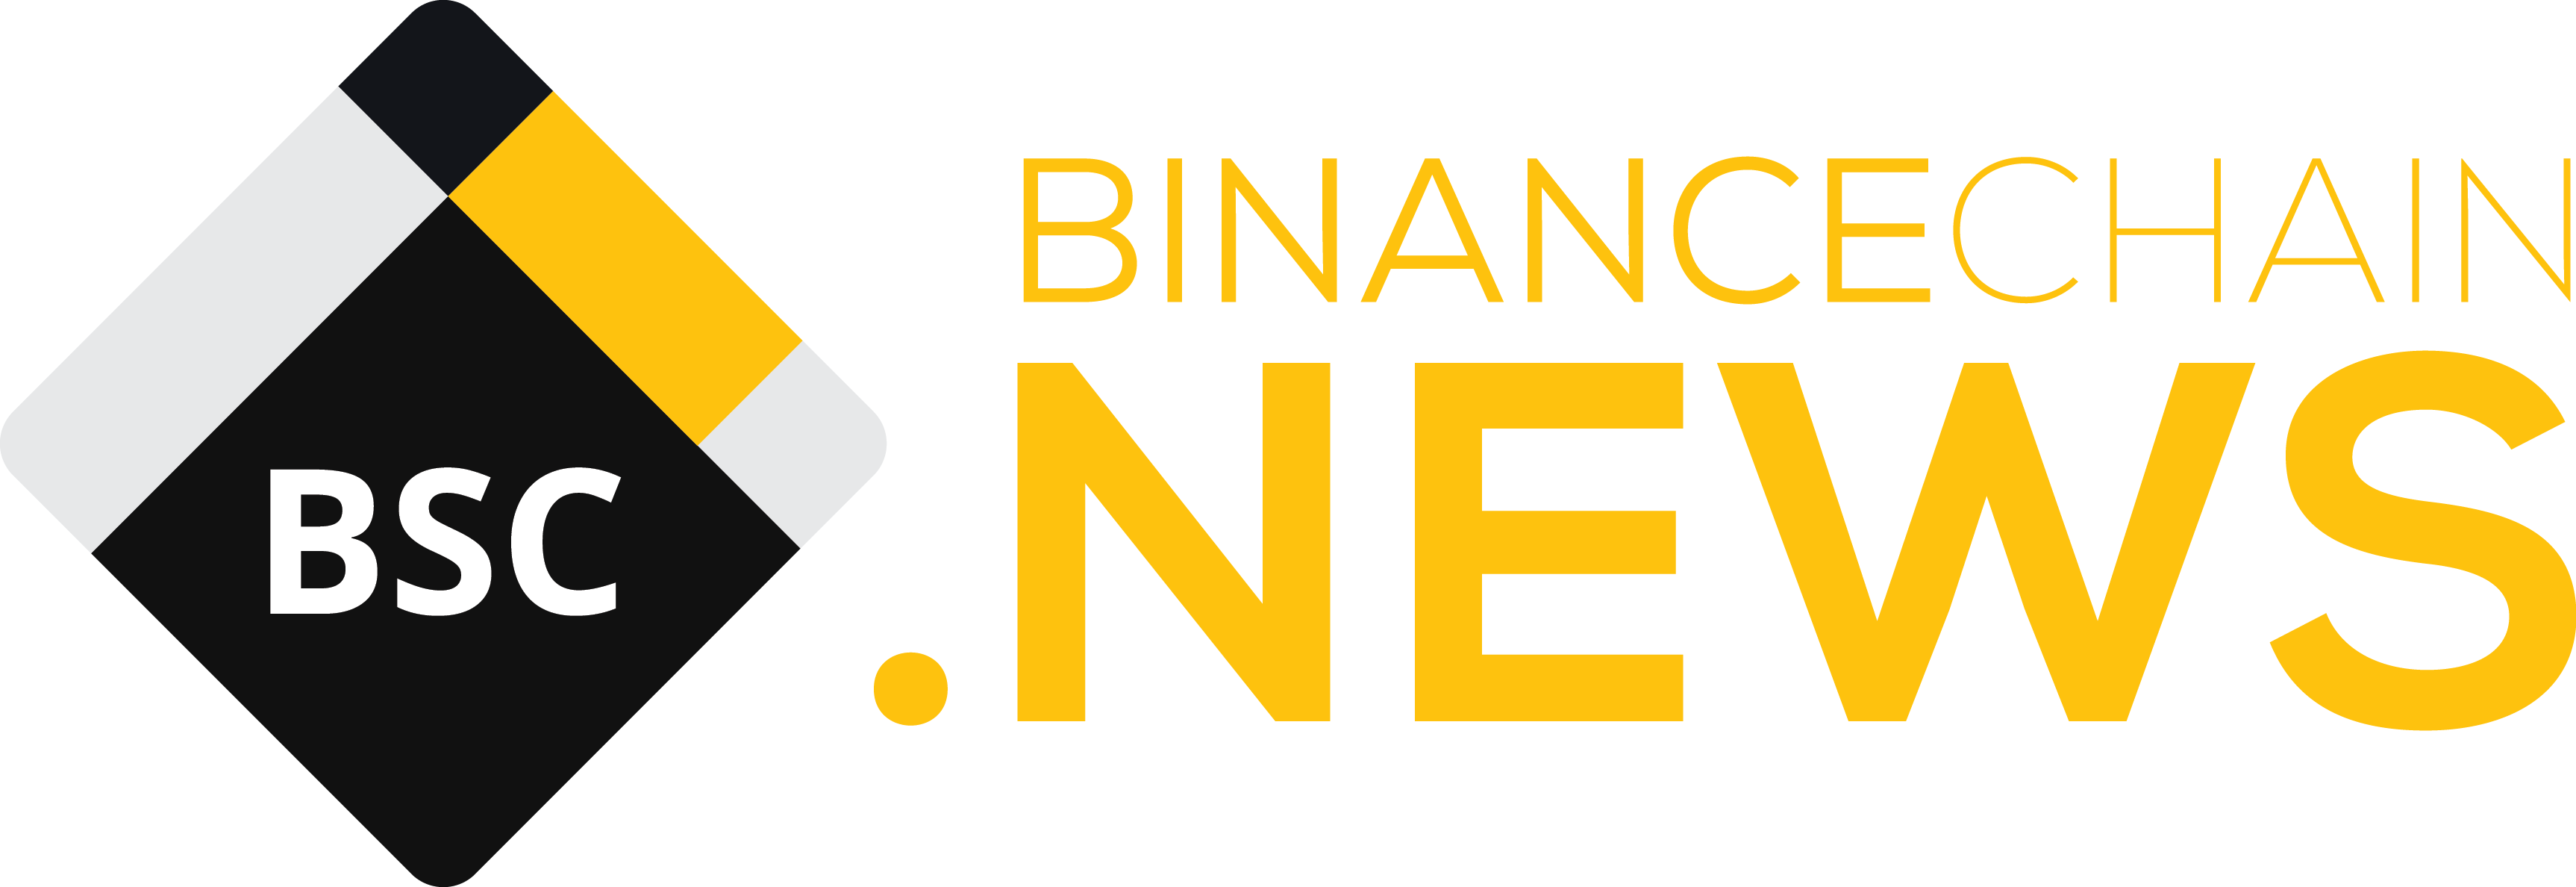 TLM now available on Binance Exchange - Binance Chain News